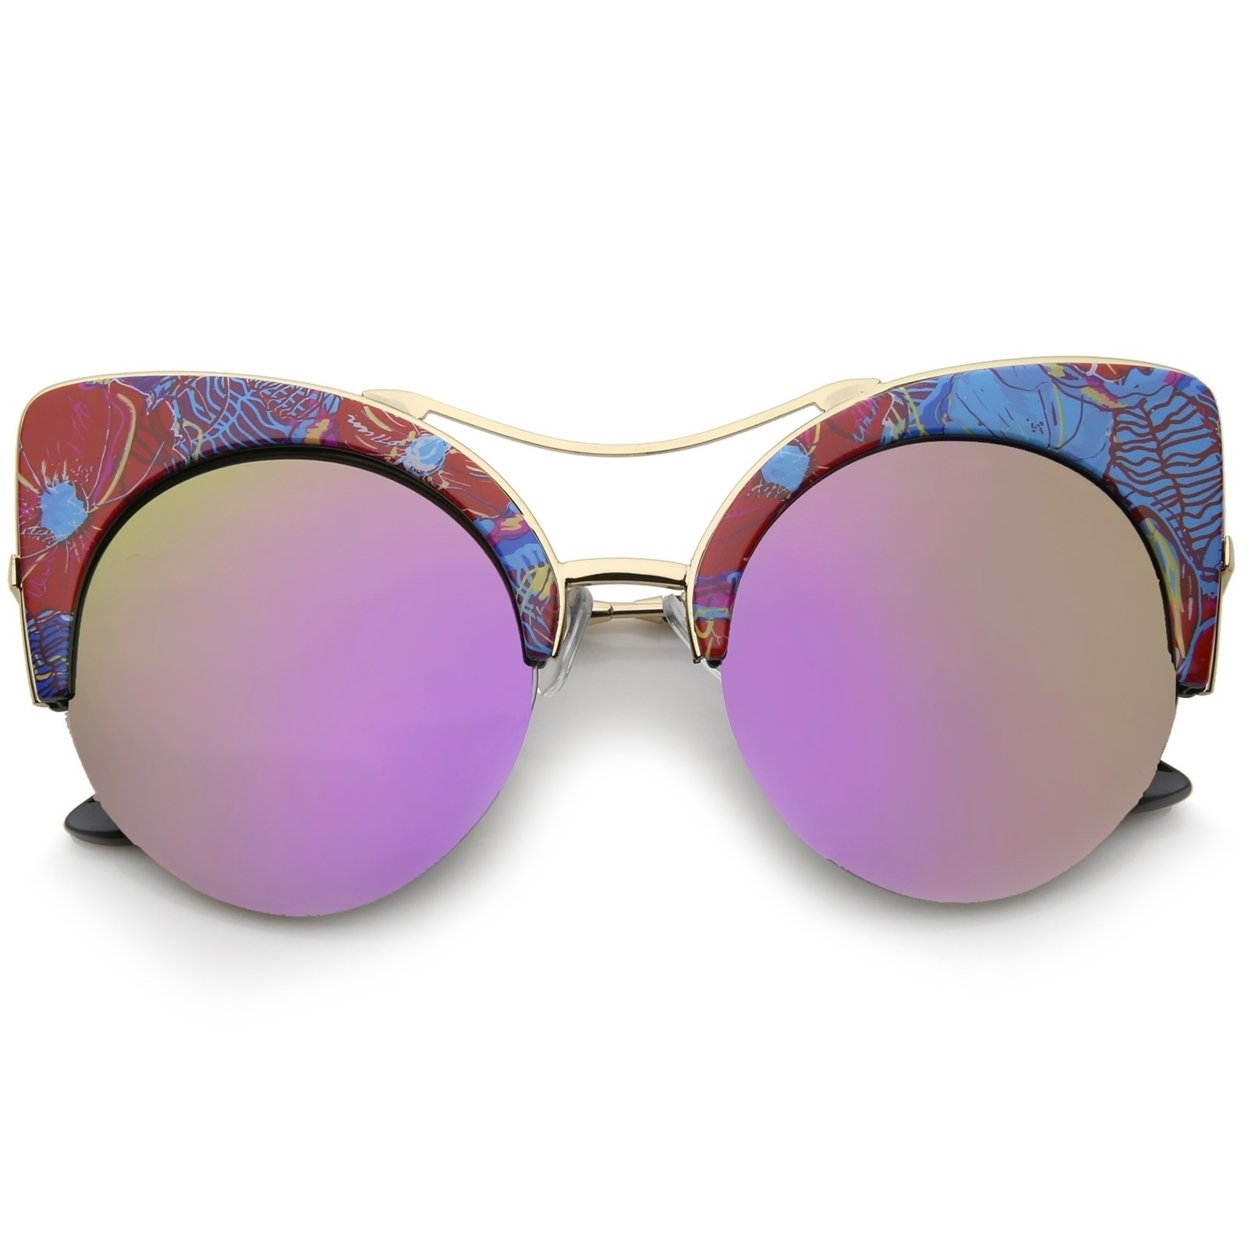 Women's Flat Lens Floral Print Semi-Rimless Round Cat Eye Sunglasses 52mm - Red-Blue-Floral / Purple Mirror